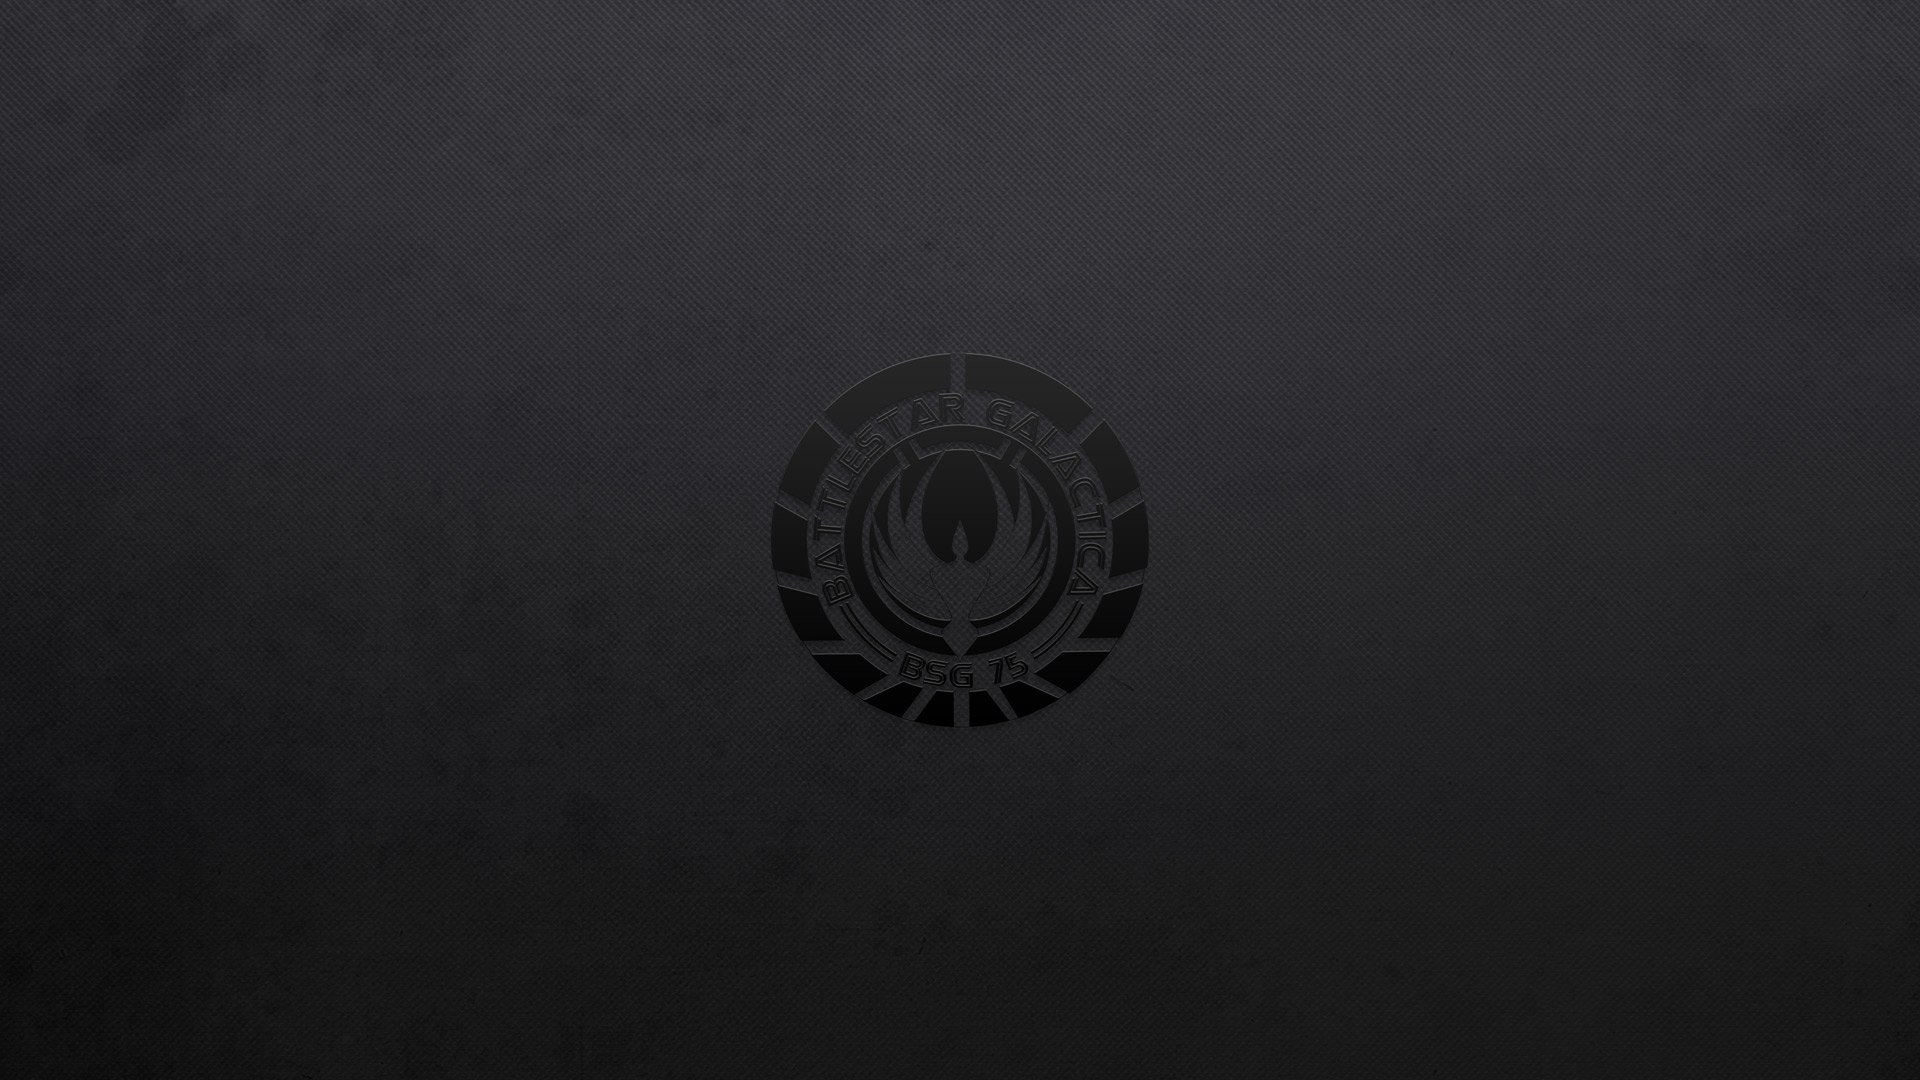 Battlestar Galactica Wallpaper And Background Image